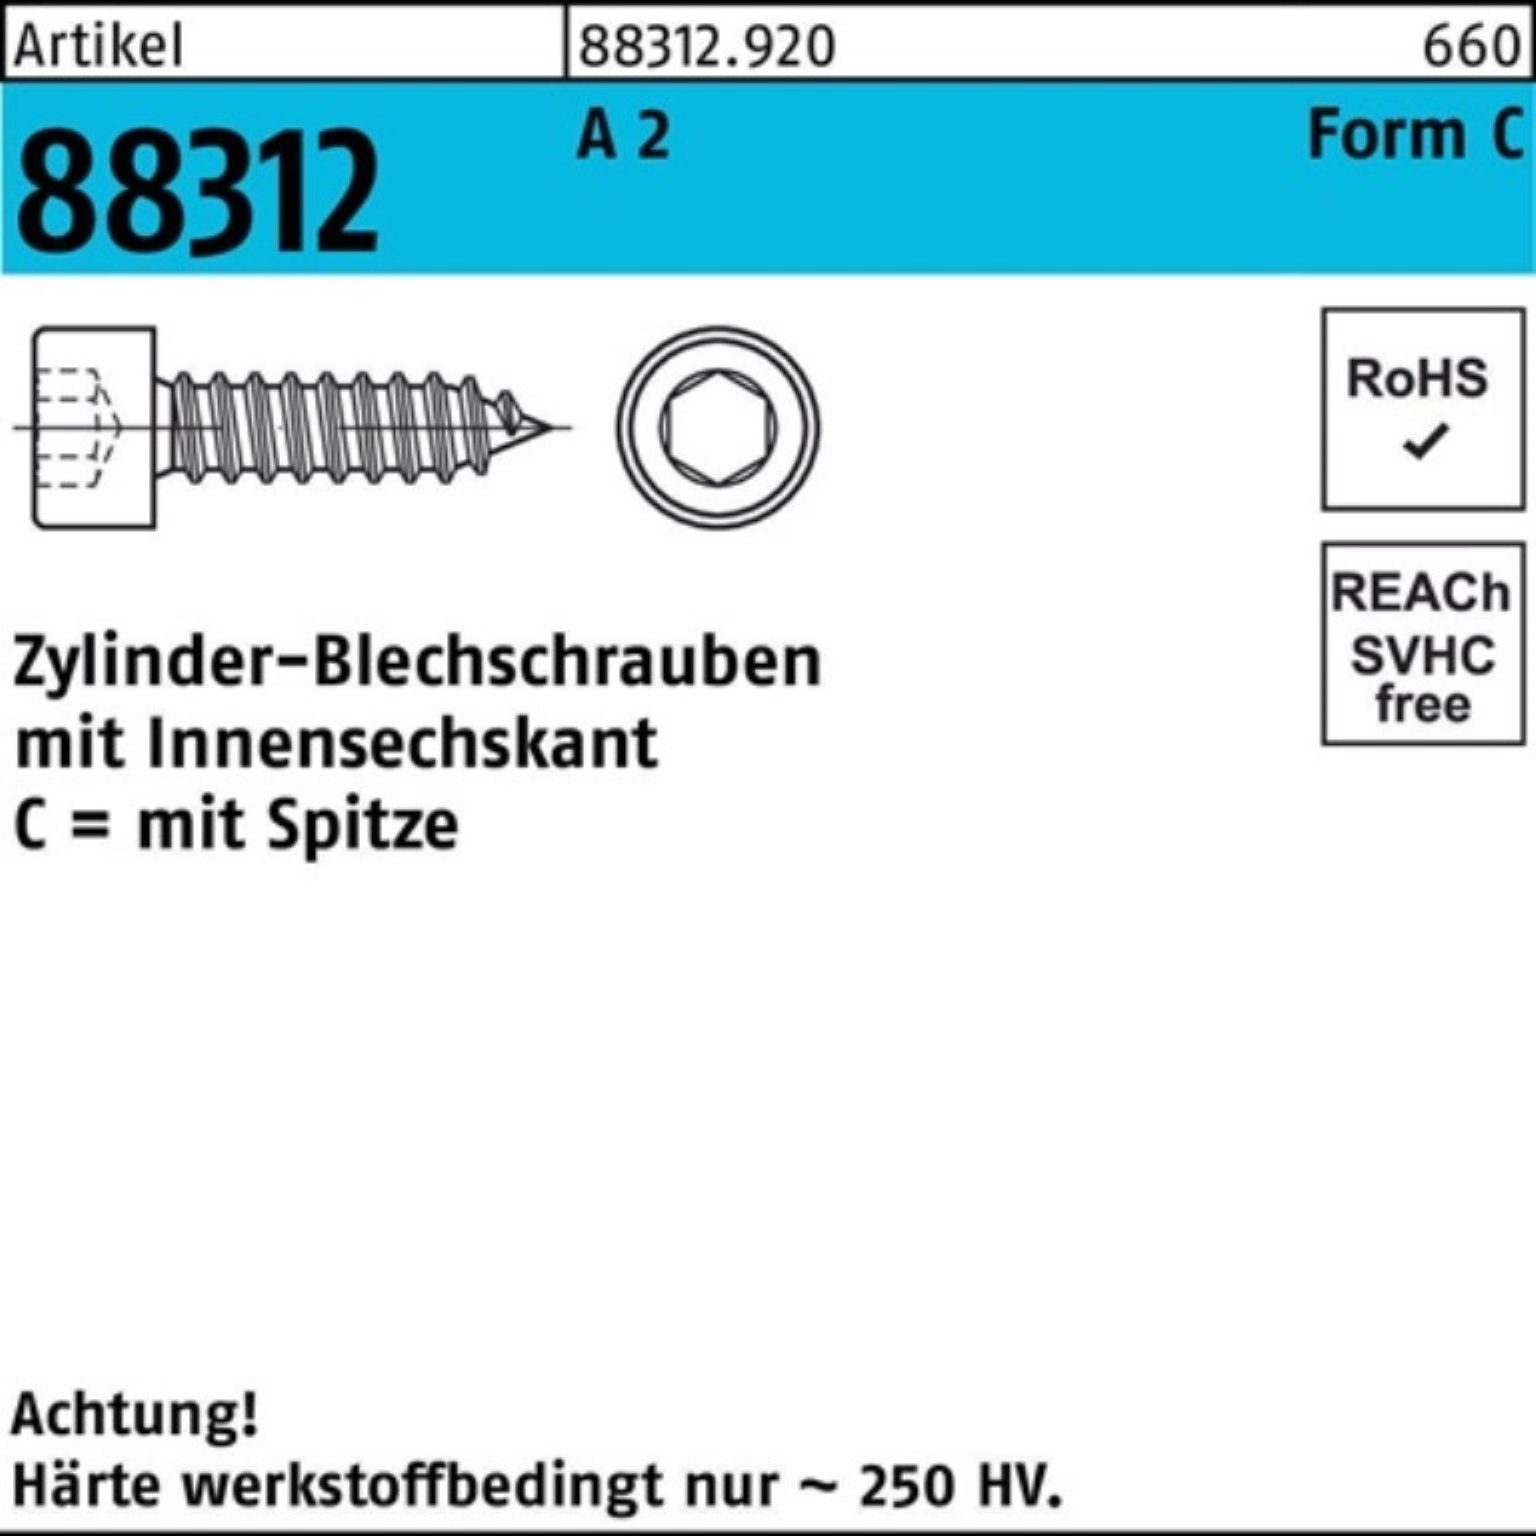 Reyher Blechschraube 200er Pack Zylinderblechschraube R 88312 Spitze/Innen-6kt C 5,5x 70 A